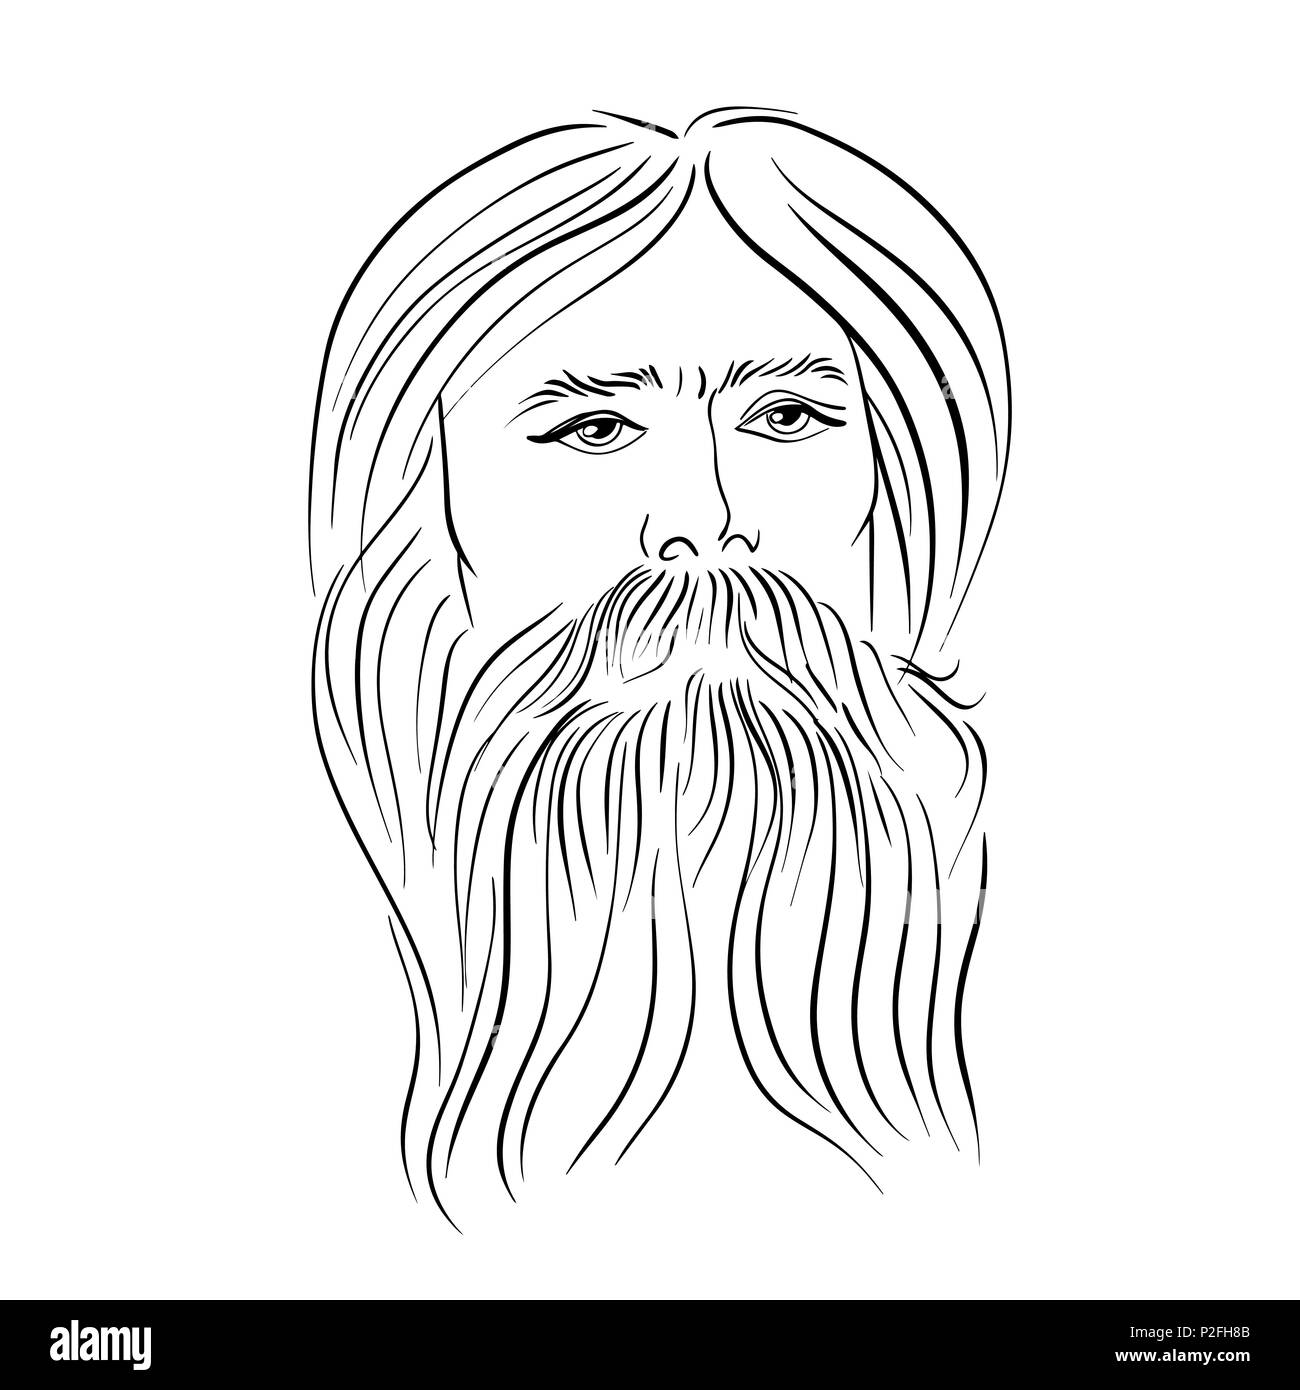 Hand drawn portrait of bearded man. Vintage style. Vector illustration. Stock Vector